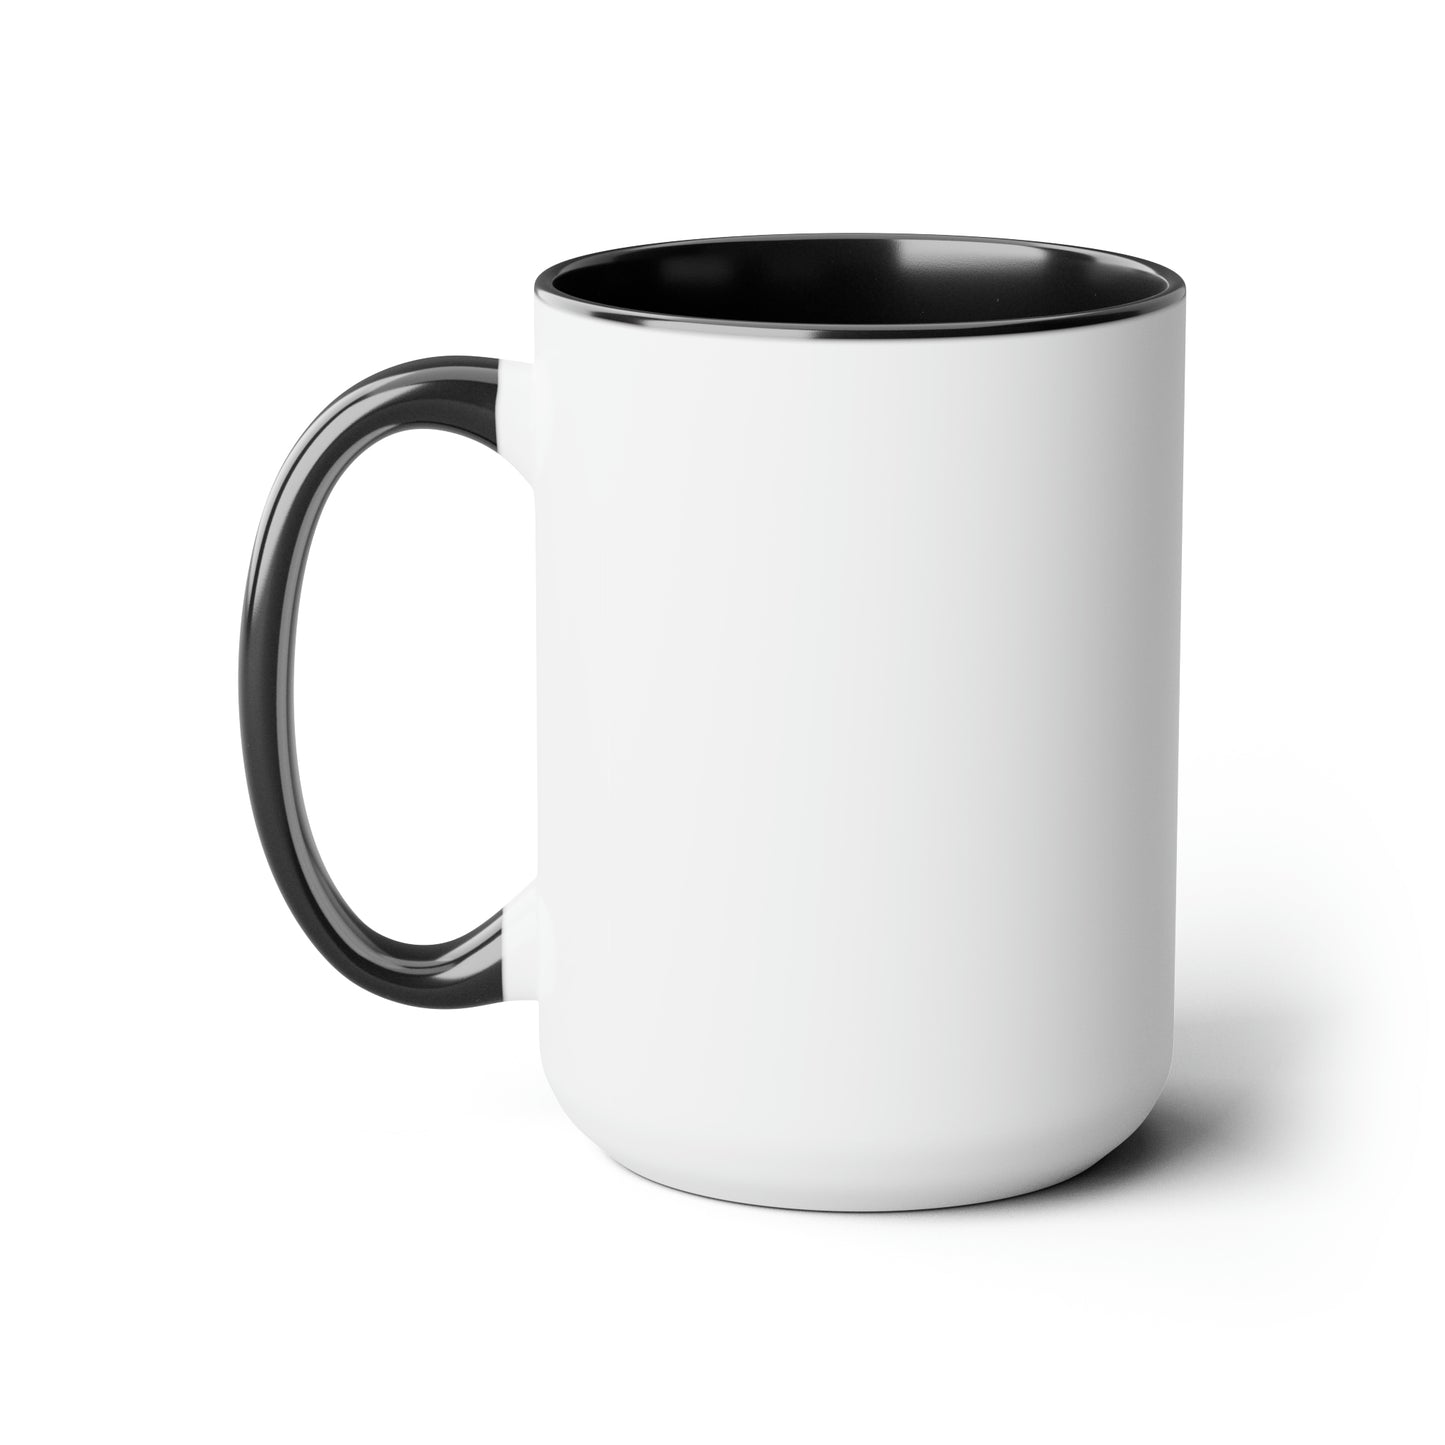 15oz Coffee Mug for Romance Readers